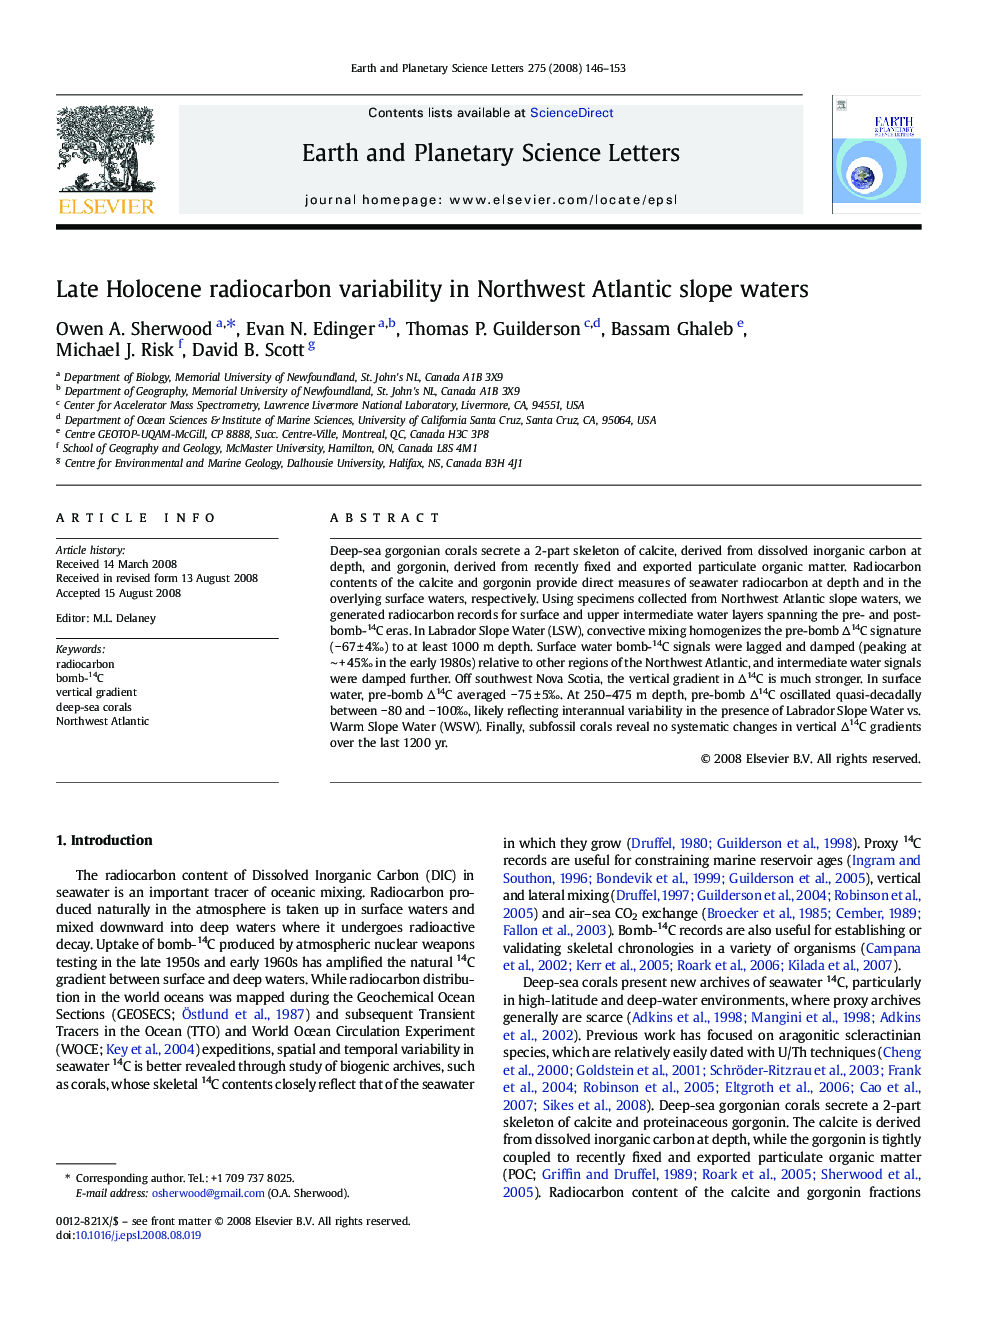 Late Holocene radiocarbon variability in Northwest Atlantic slope waters